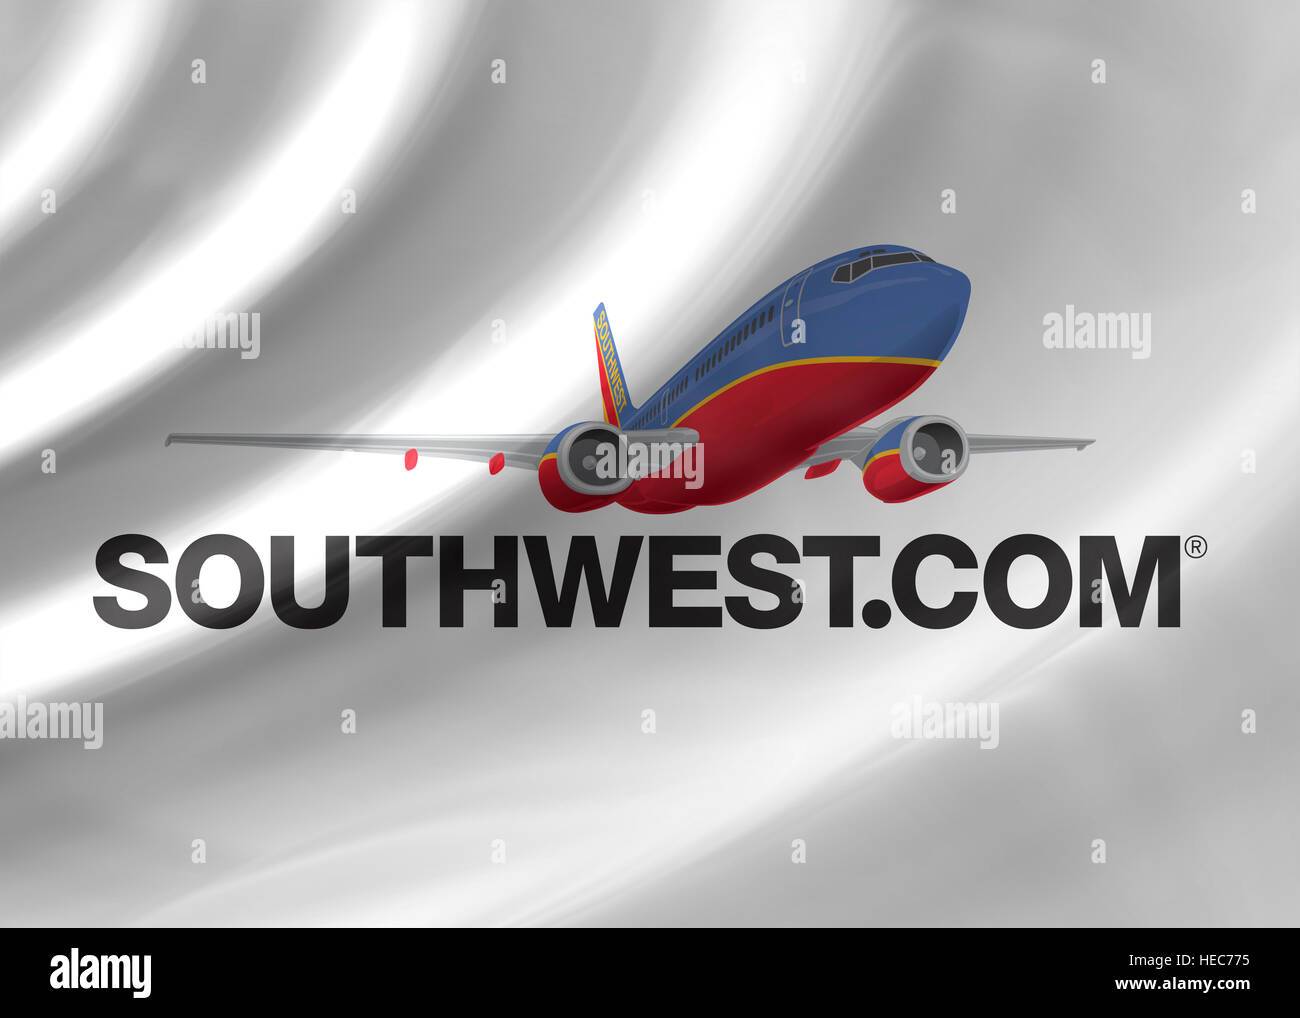 Southwest Airlines Air logo icon flag emblem Stock Photo